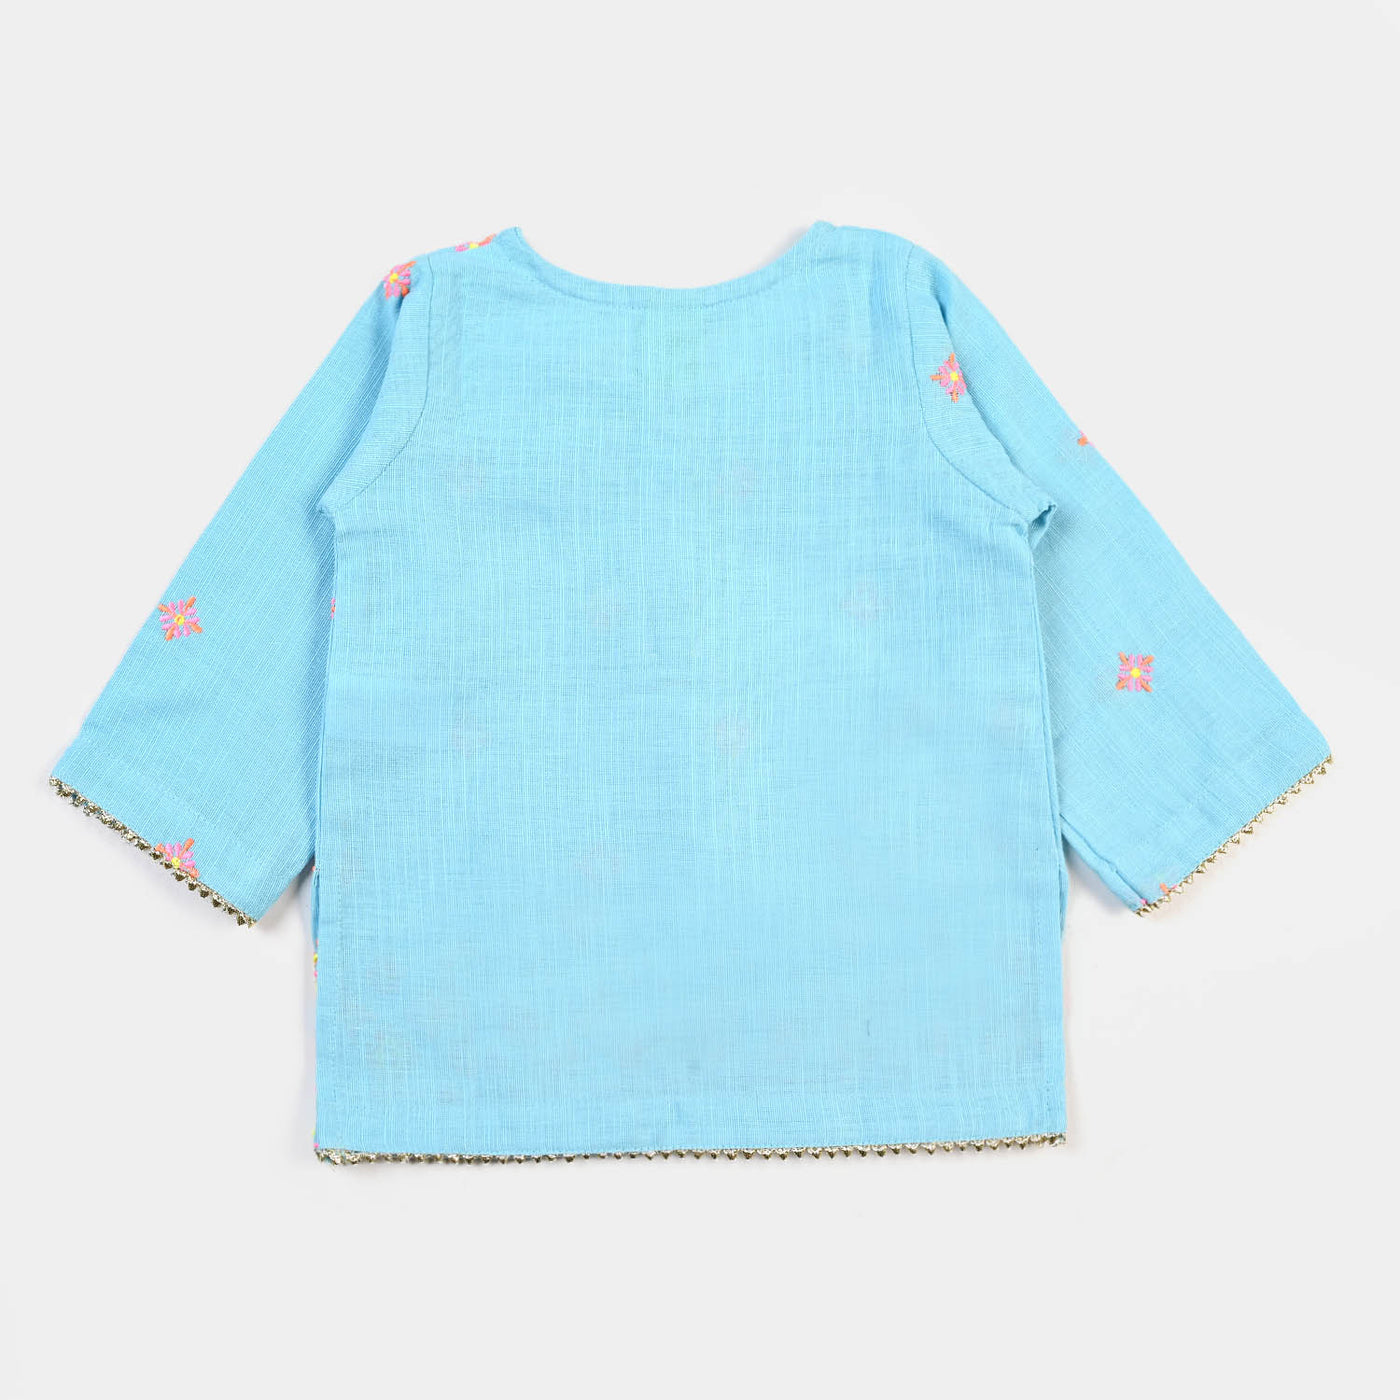 Infant Girls Cotton Embroidered Kurti Pop - Blue